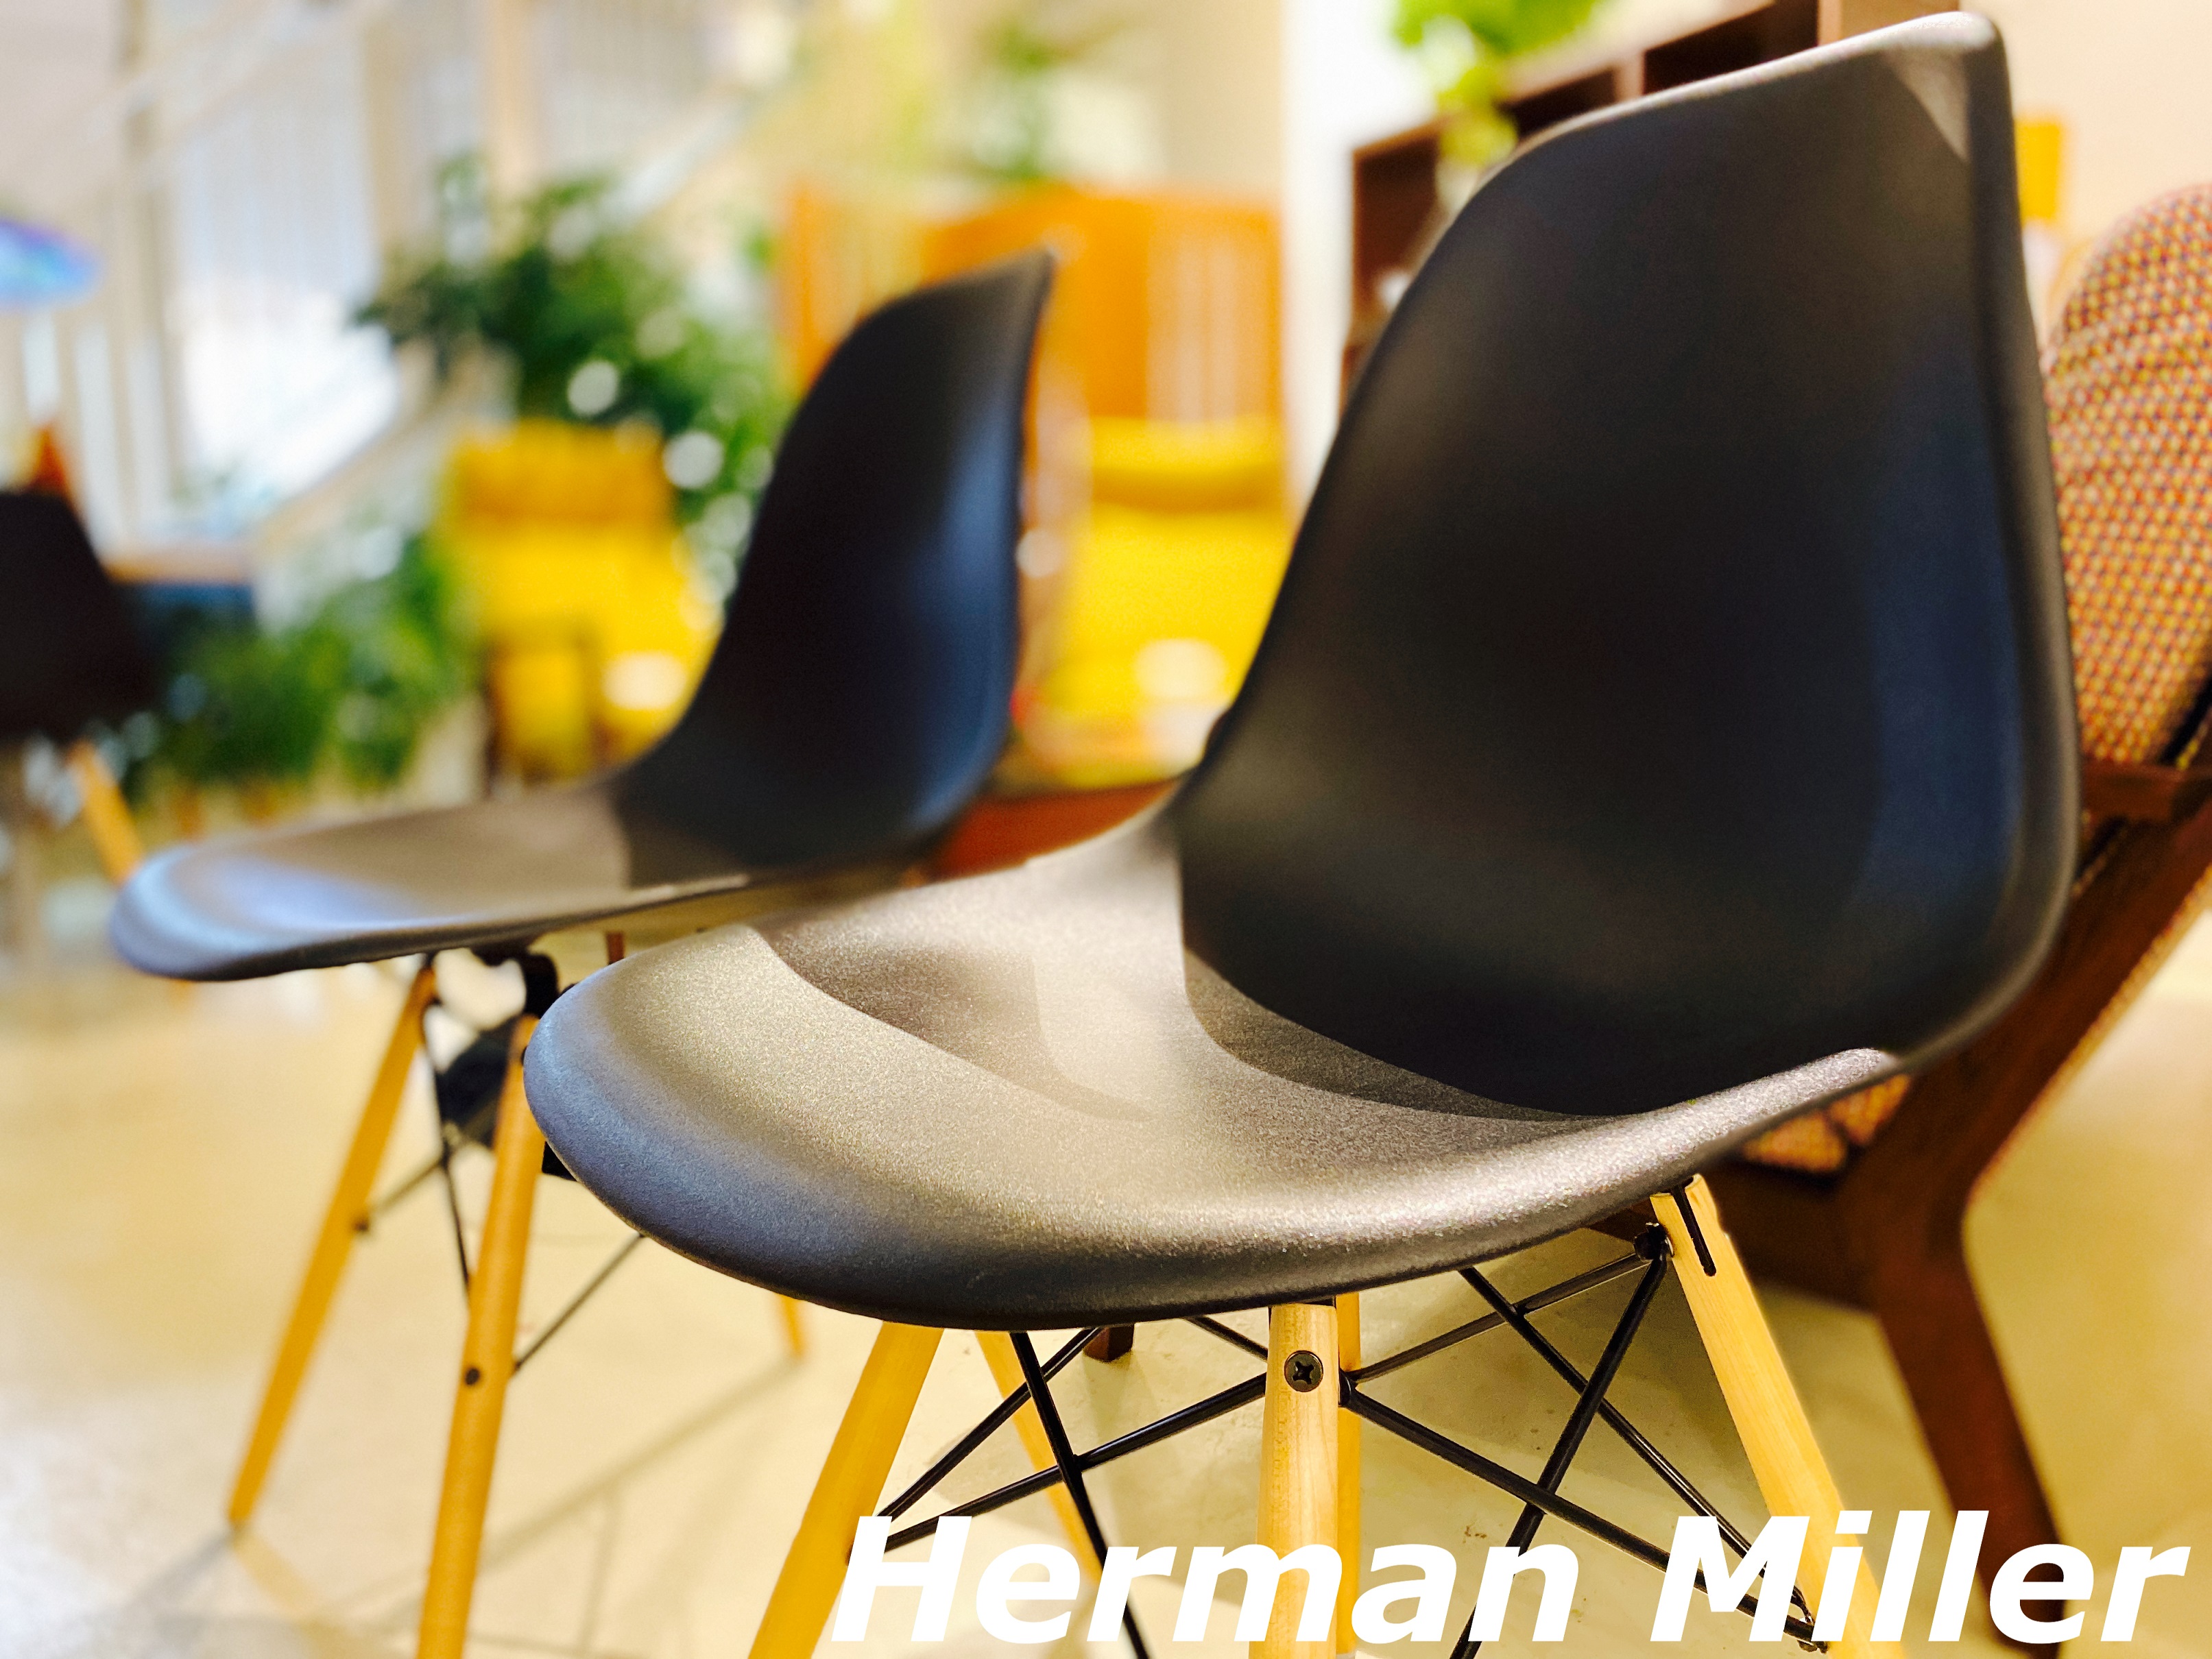 Hermanmiller ハーマンミラー サイドシェルチェア チェア 椅子 ブラック 宇都宮のリサイクルショップ オトワリバース